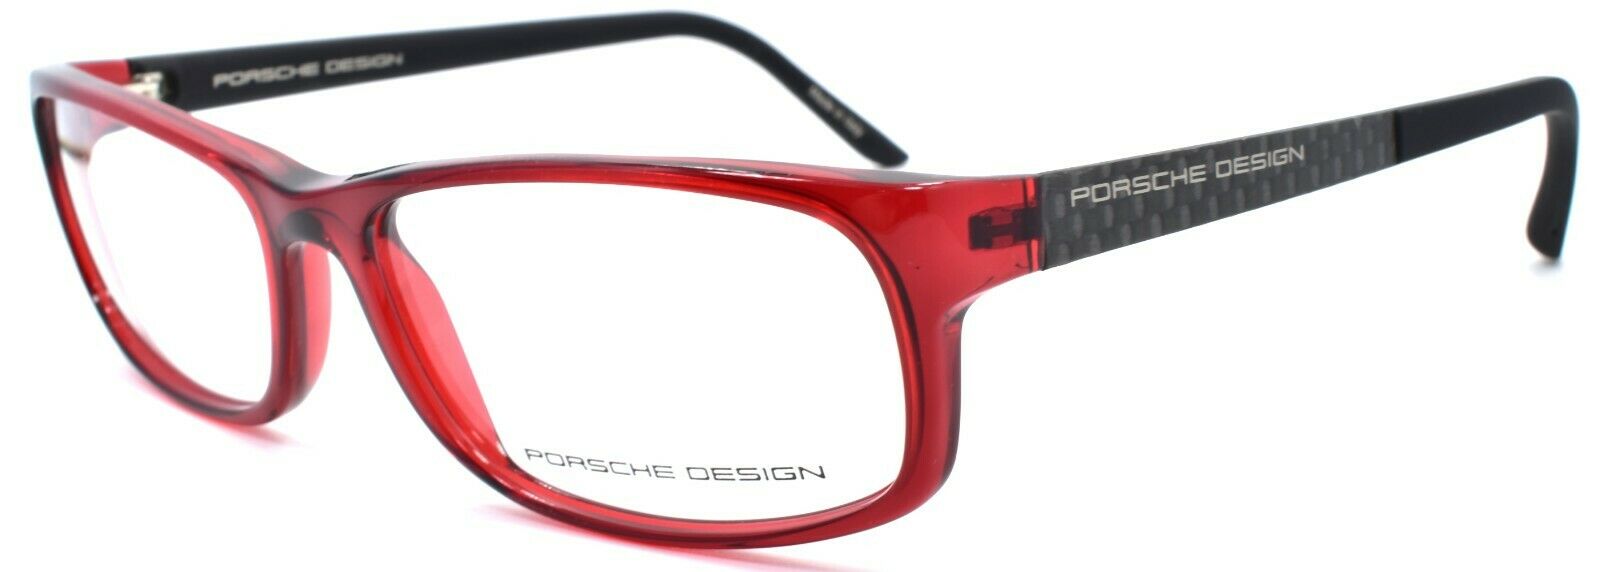 1-Porsche Design P8243 C Women's Eyeglasses Frames 54-15-135 Burgundy-4046901711580-IKSpecs